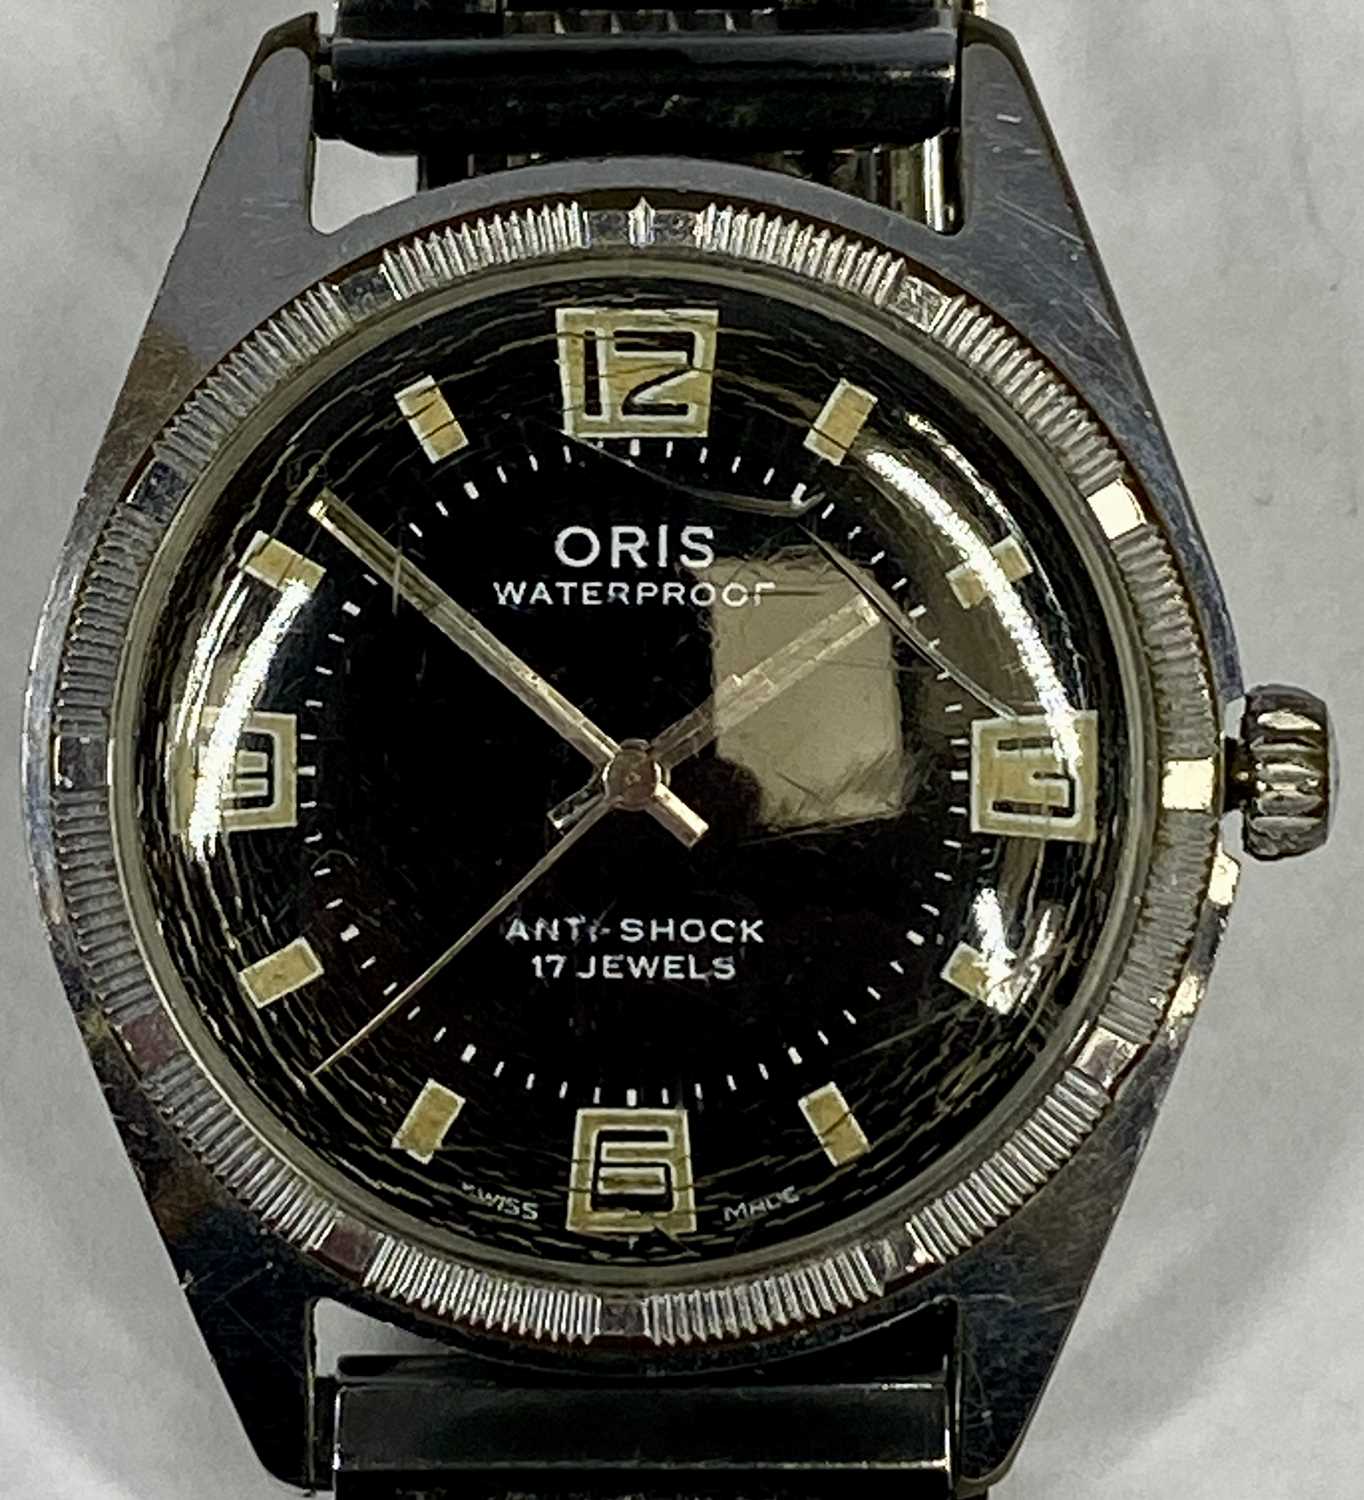 ORIS WATERPROOF GENTS WRISTWATCH, anti-shock 17 jewels, stainless steel case, black dial, 34mm - Image 2 of 3